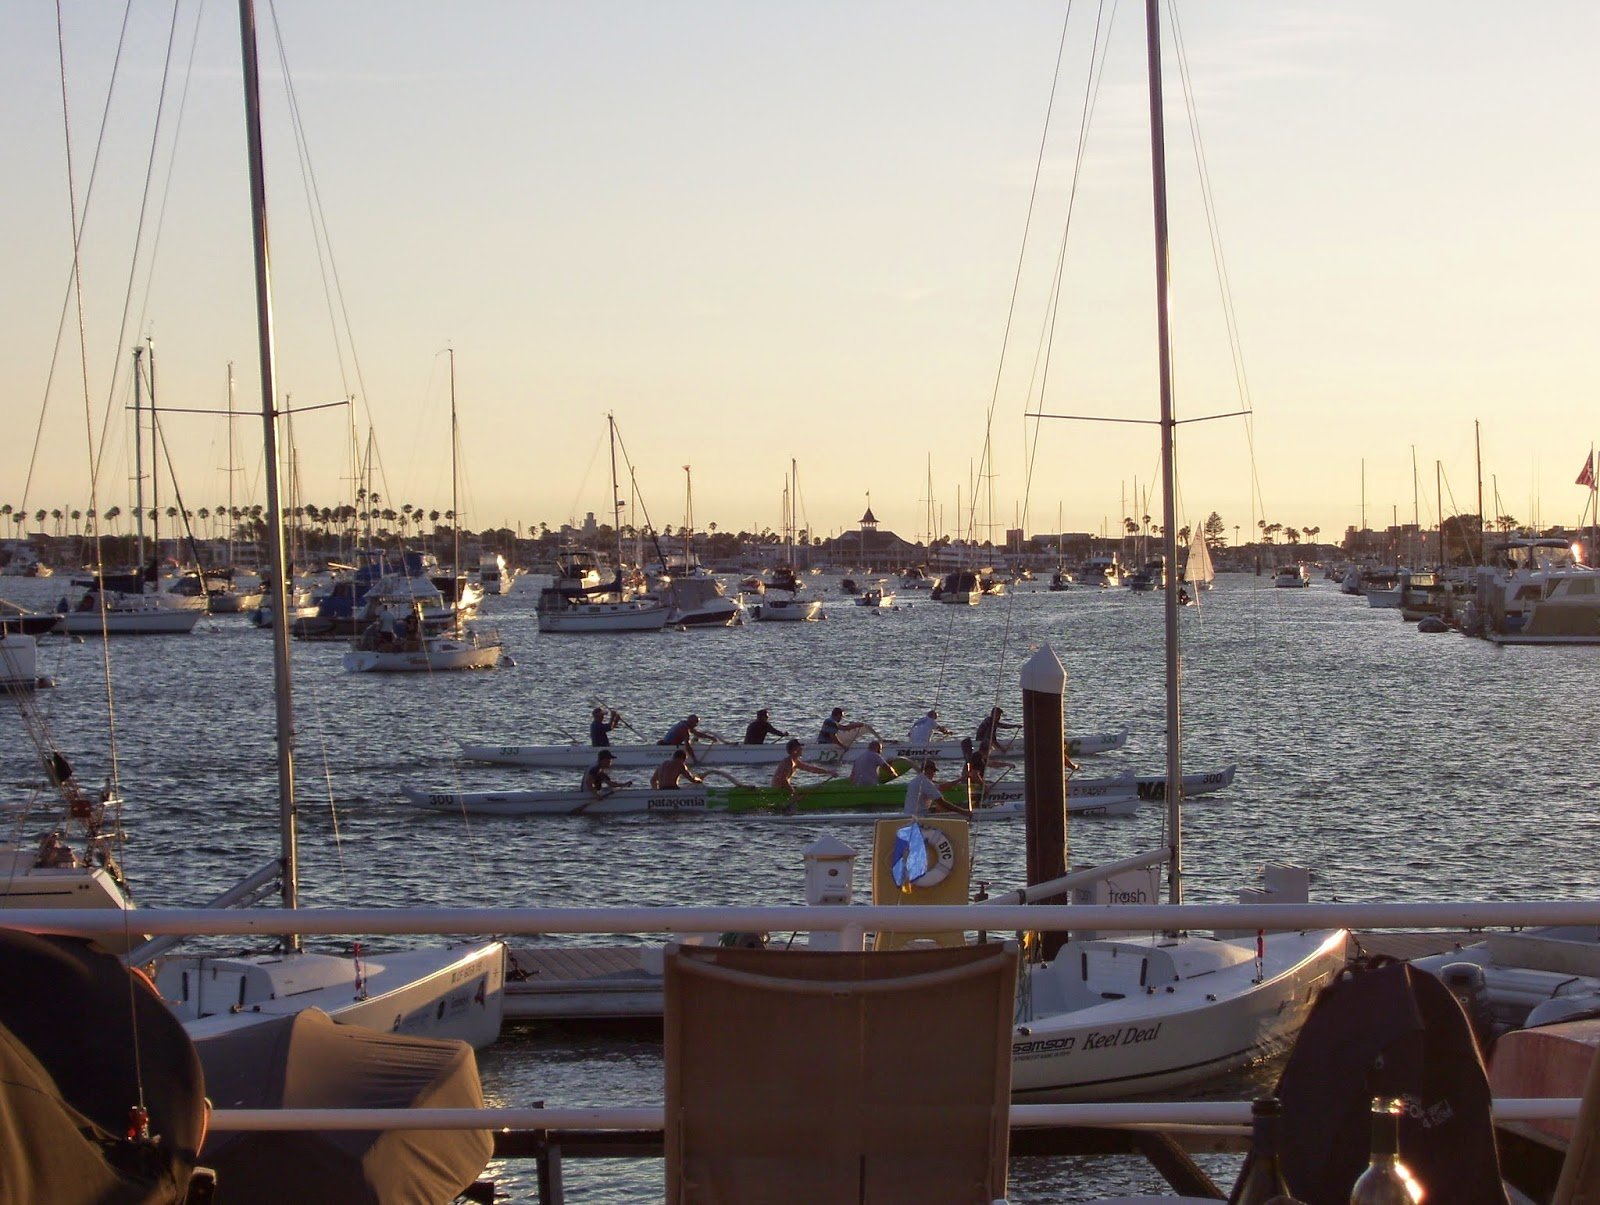 Newport Beach Yacht Club